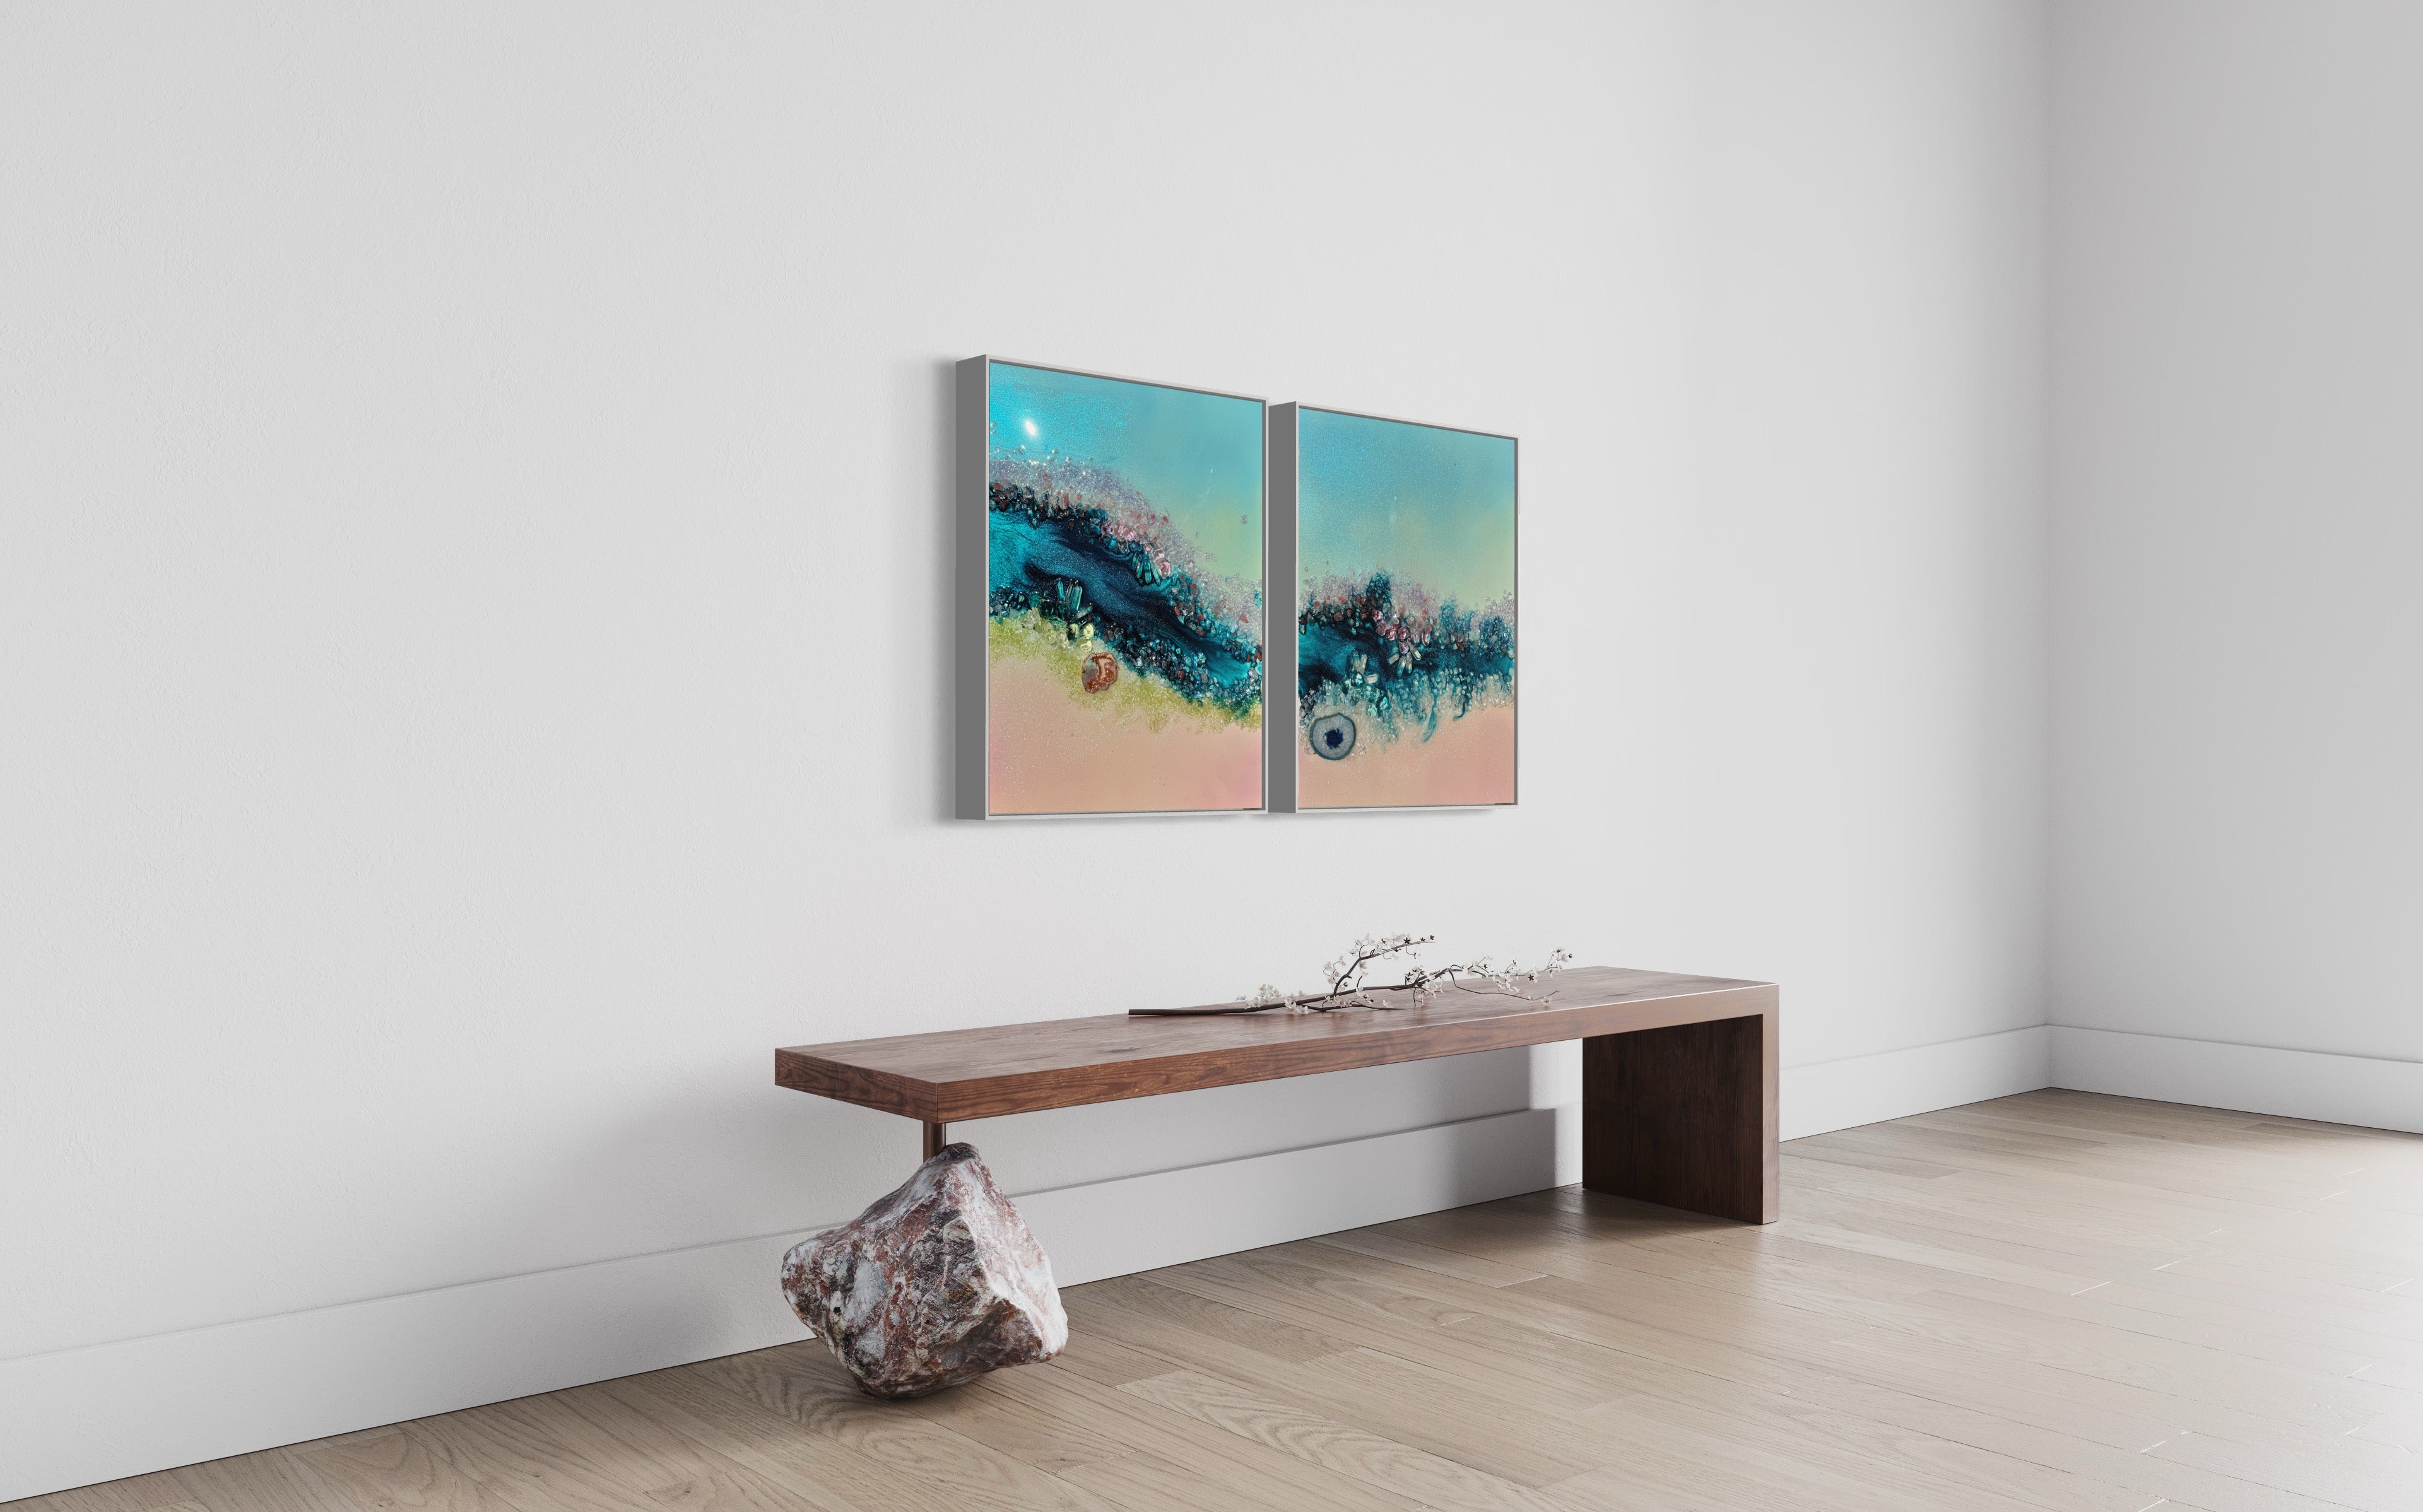 Heart Reef Bliss 2 with Swarovski, Amethyst, Agate, Quartz & Epoxy Glass on Canvas 40x50cm (Copy)